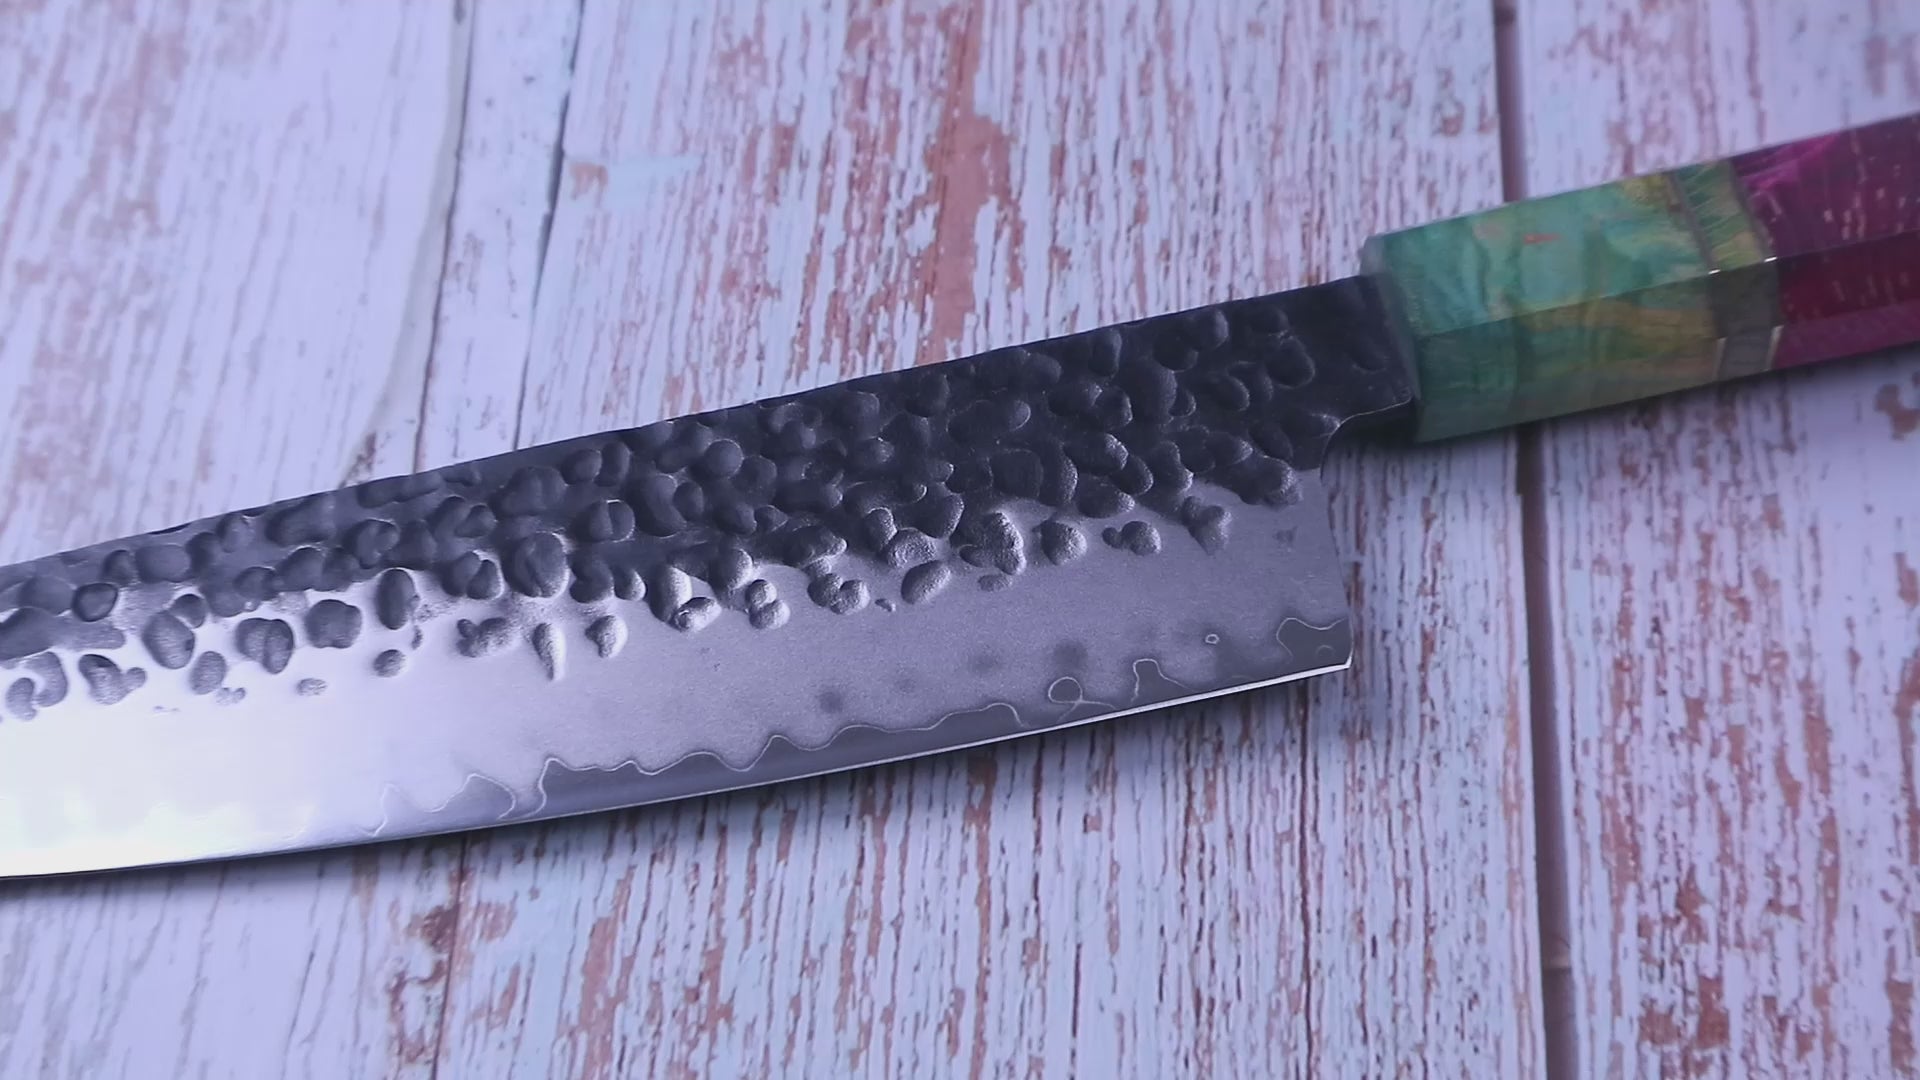 Handmade Japanese Knife Set of 3 Knives - AUS10 Steel Chef Knife